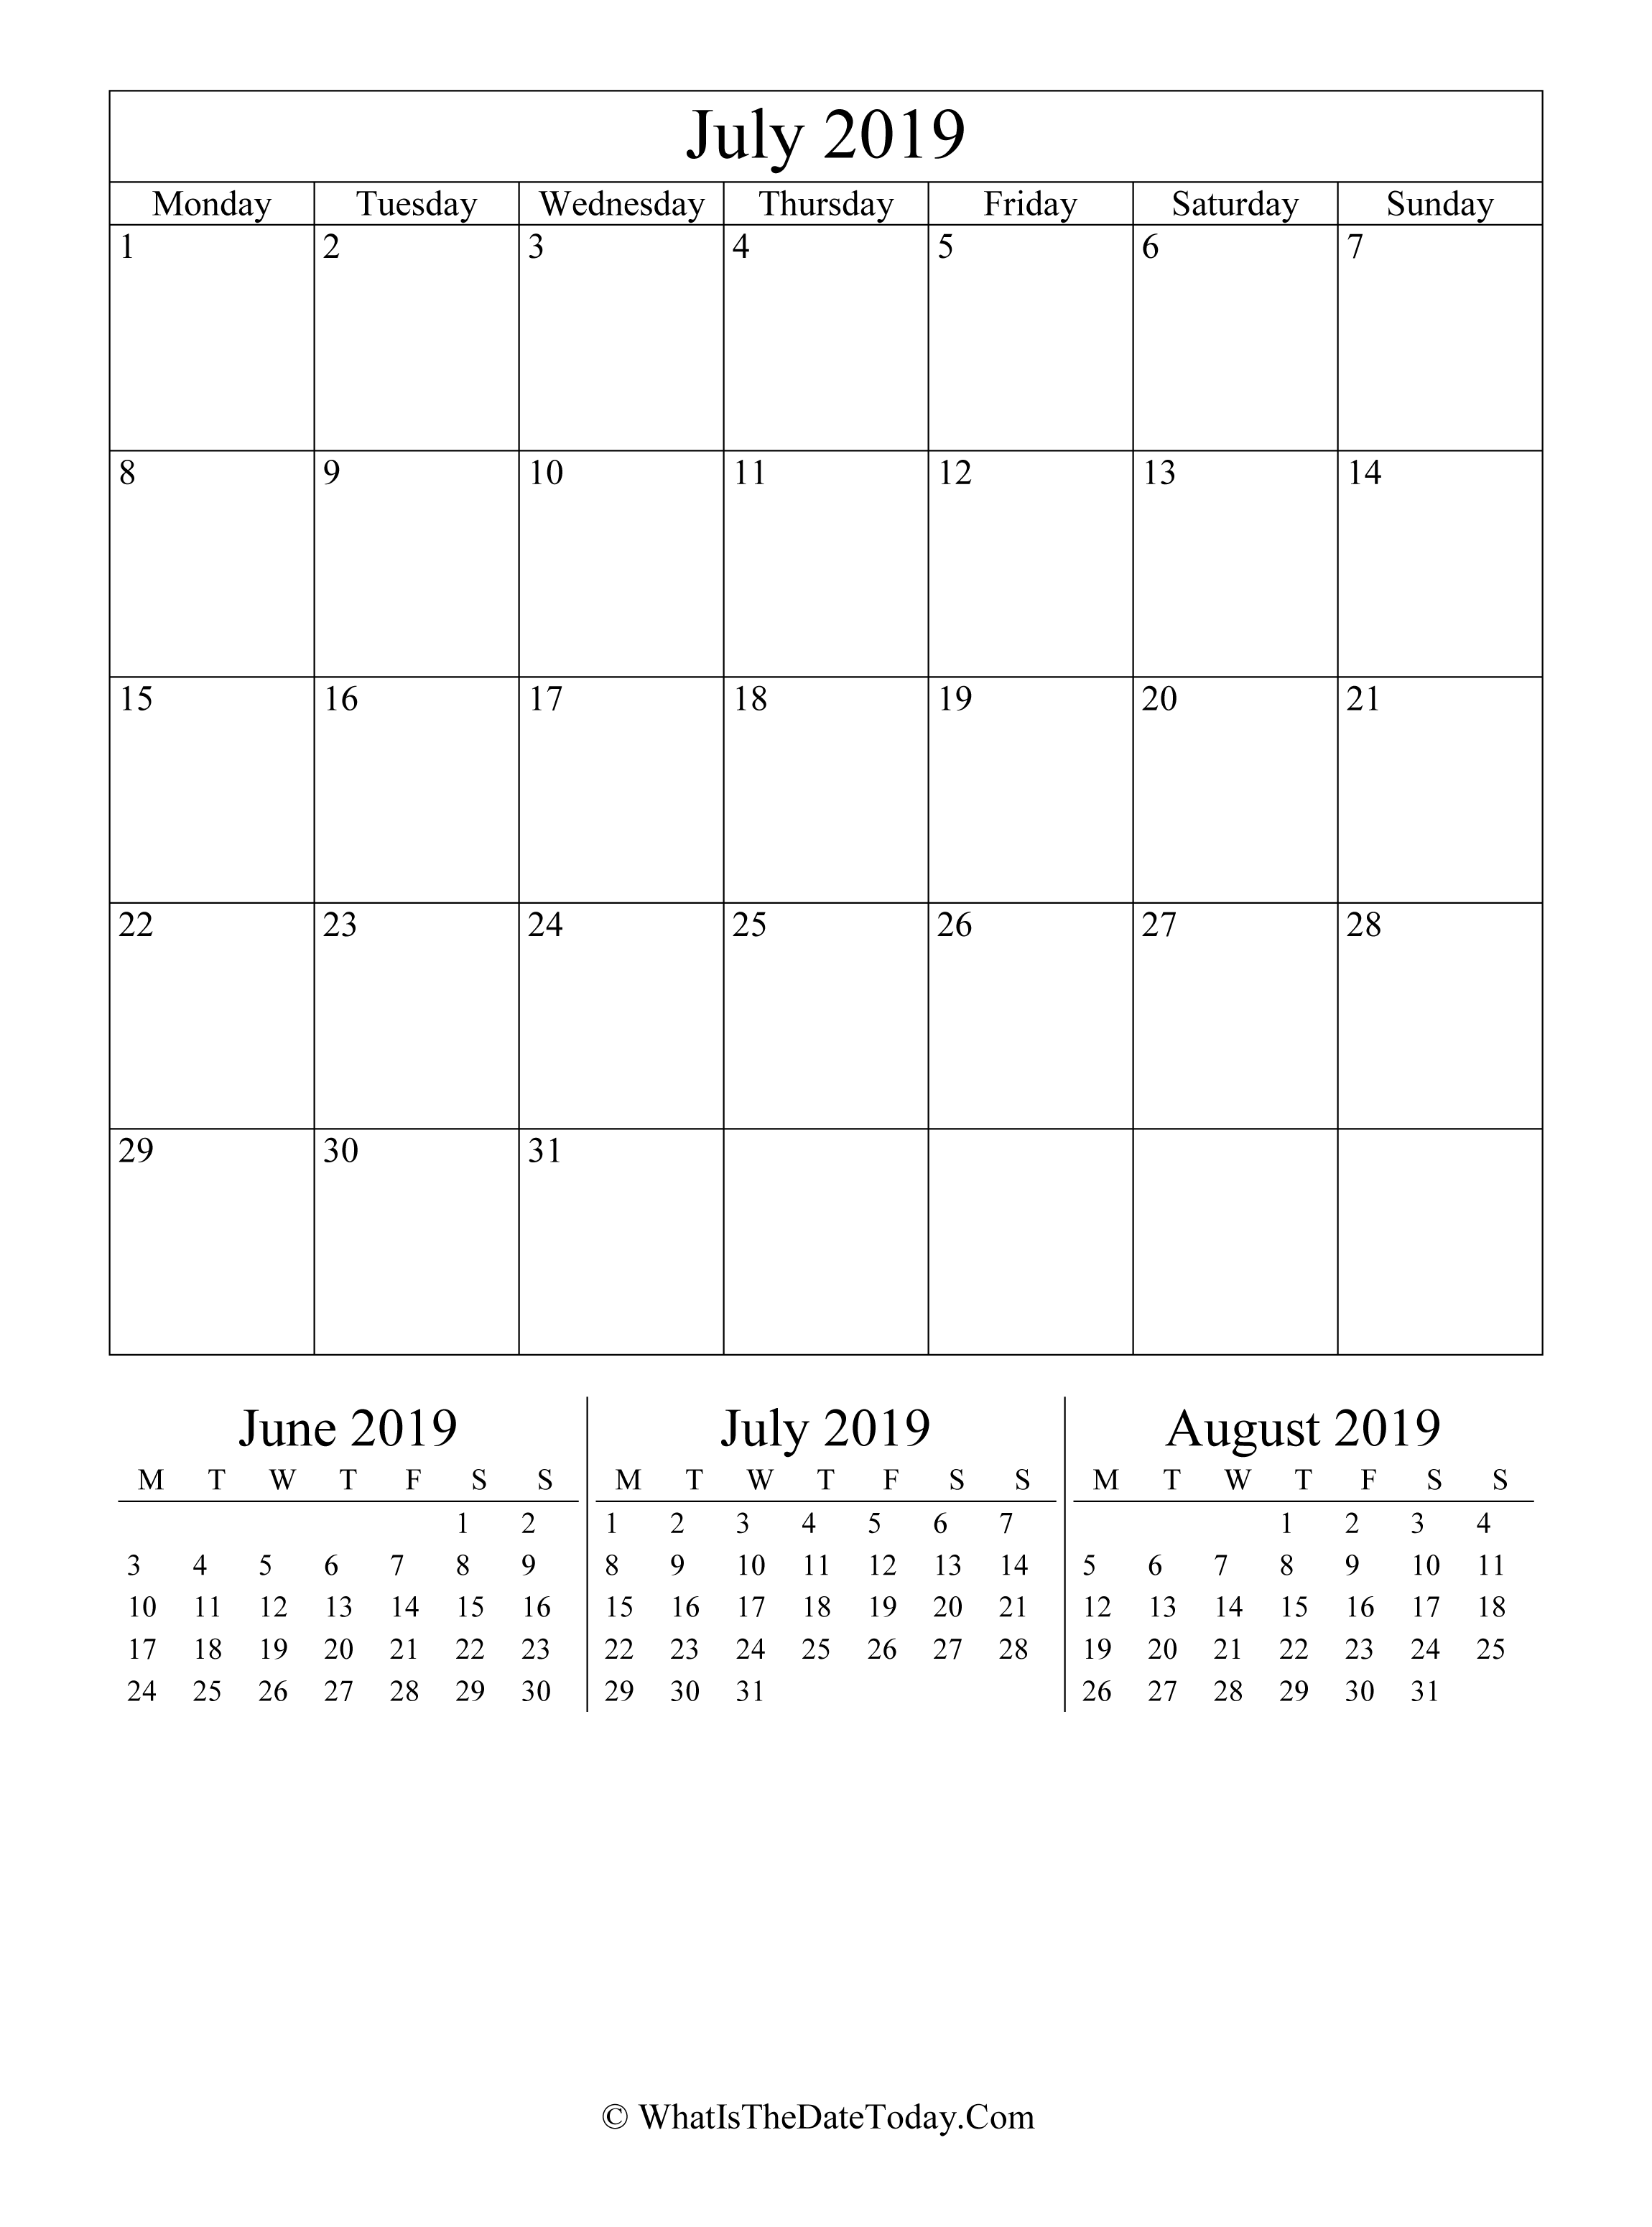 july-2019-editable-calendar-vertical-layout-whatisthedatetoday-com